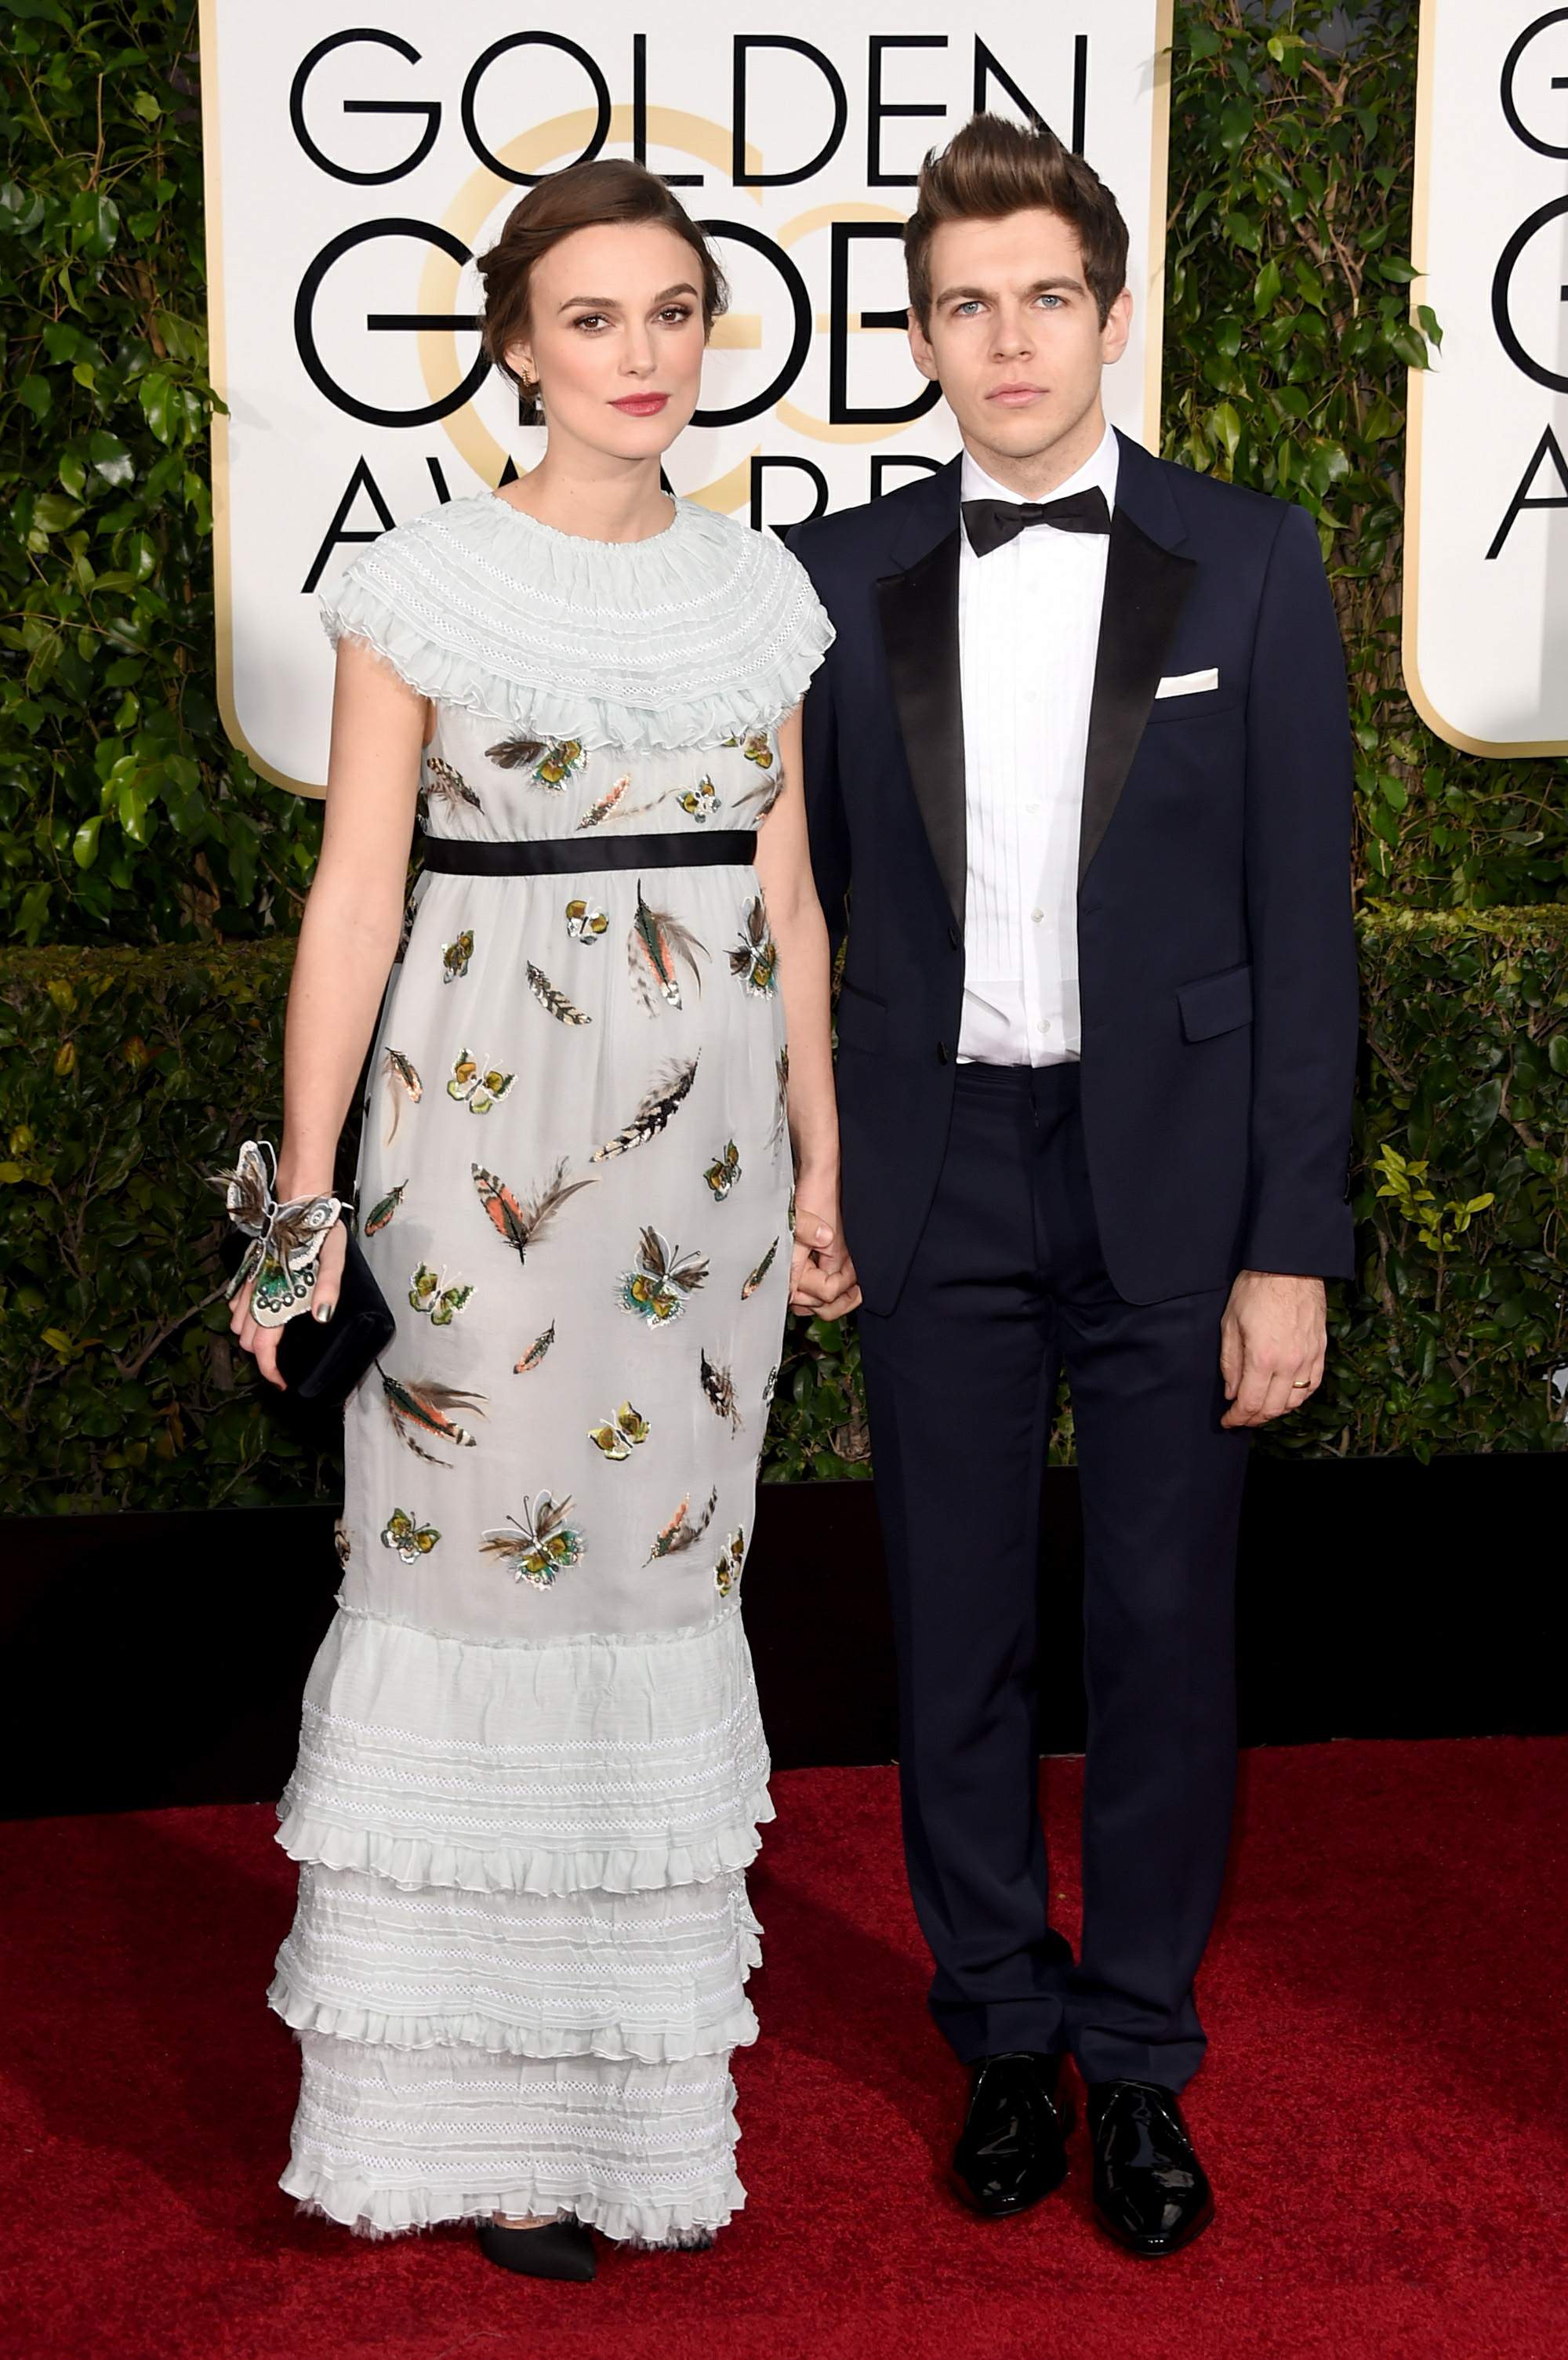 Keira Knightley in Golden Globe Awards